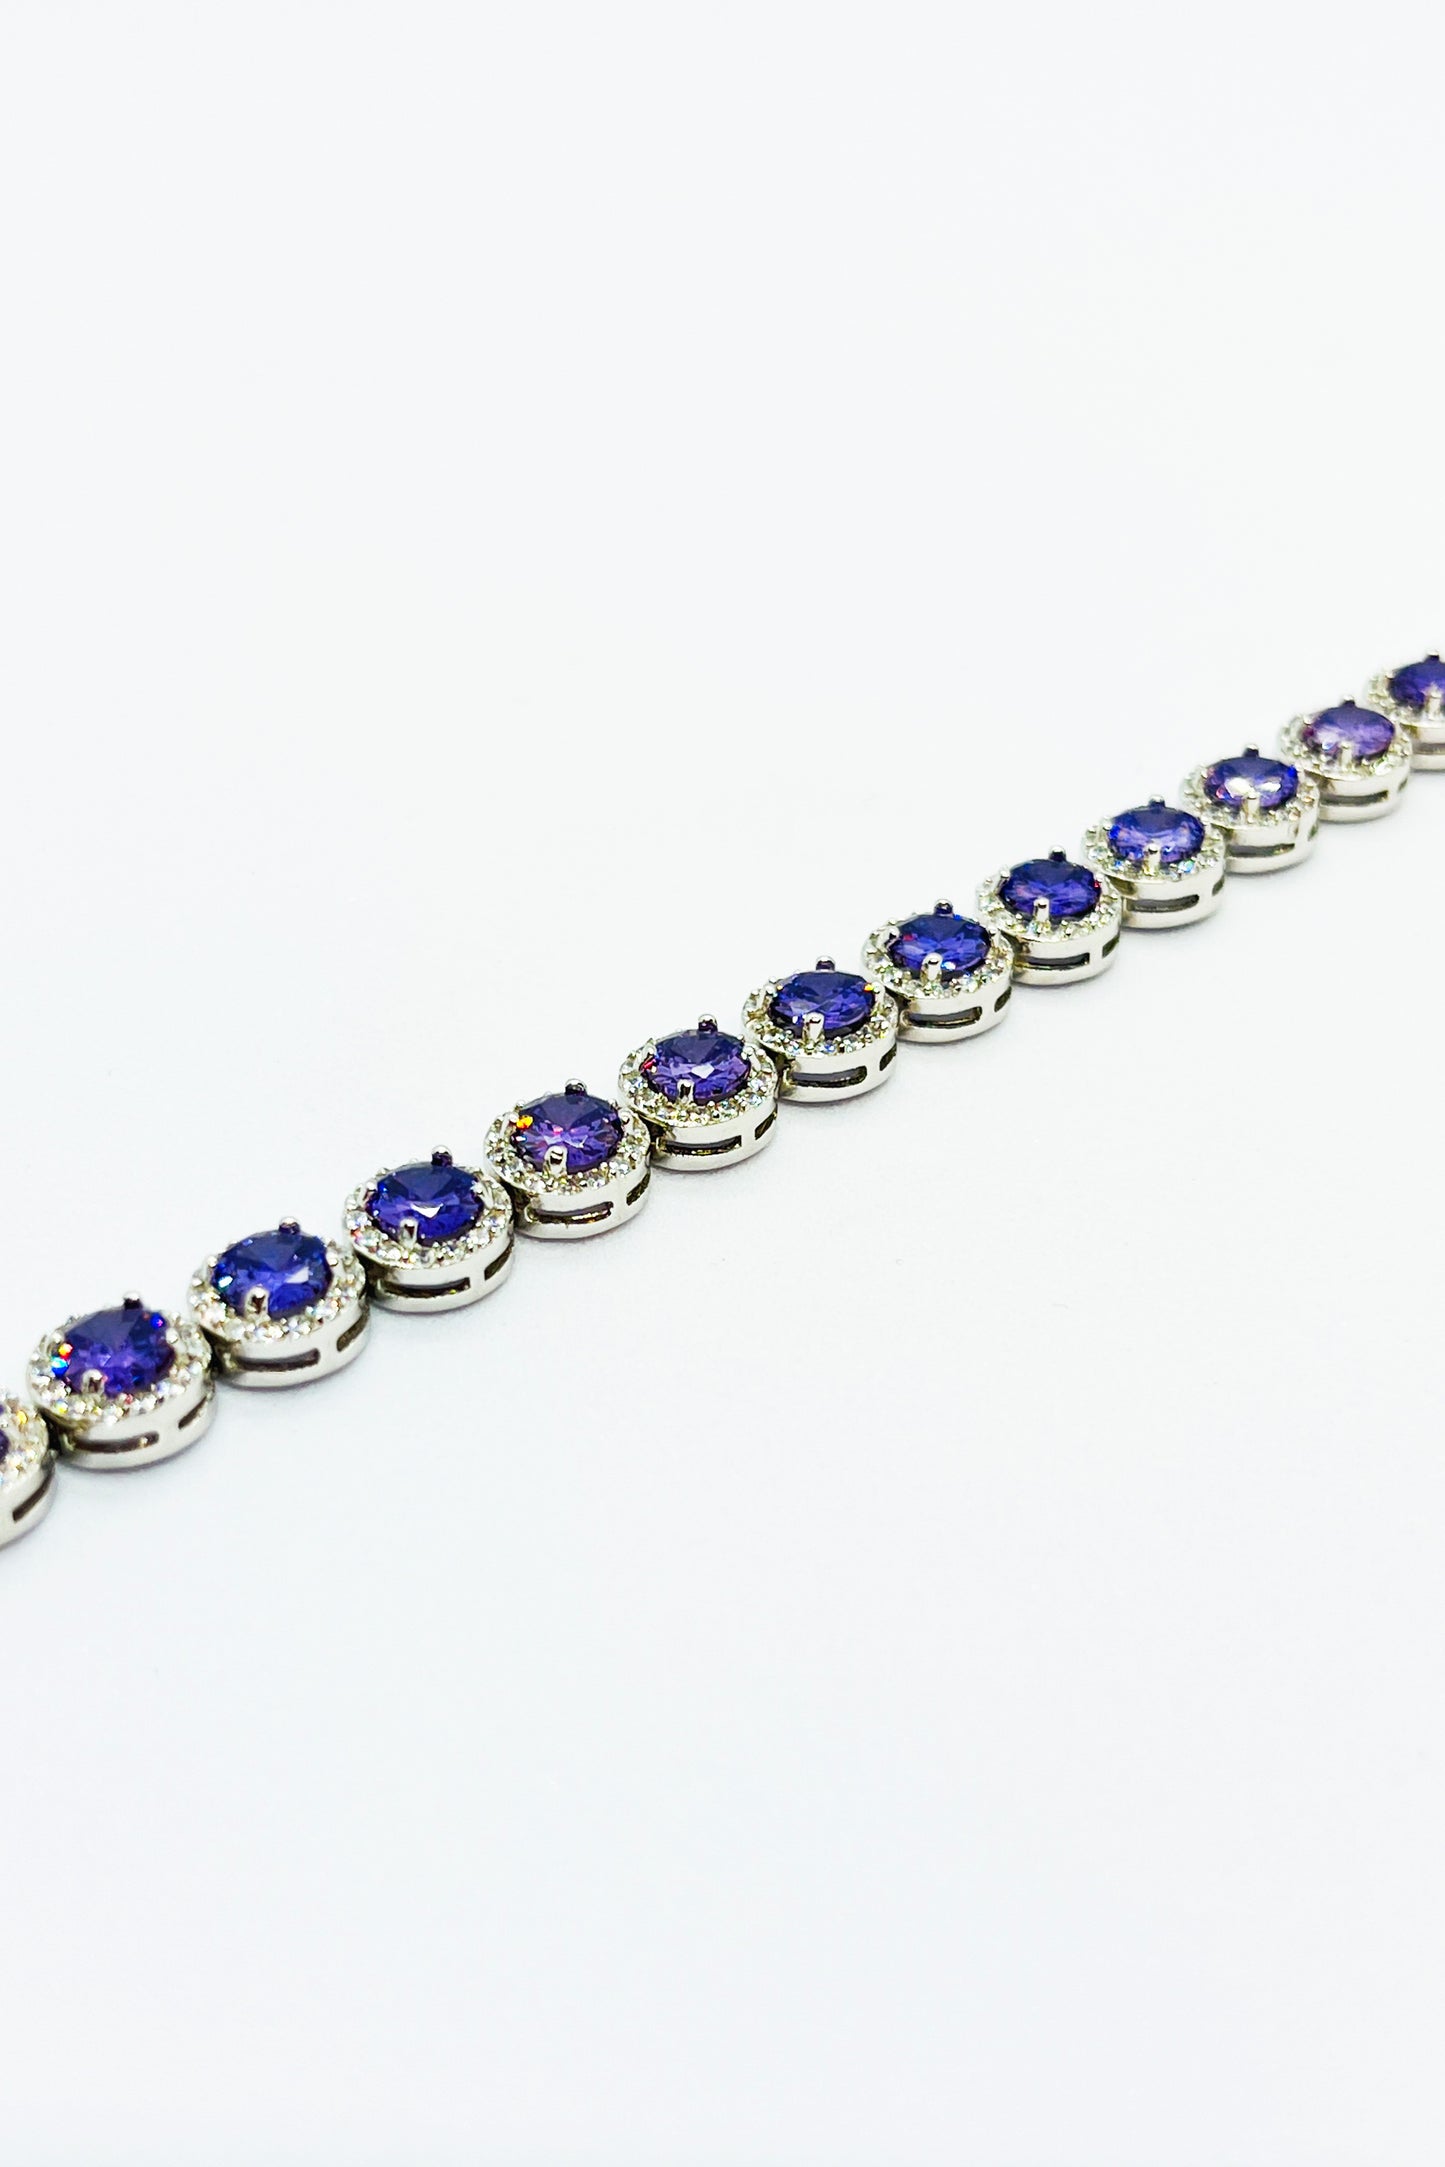 Princes bracelet with purple stones